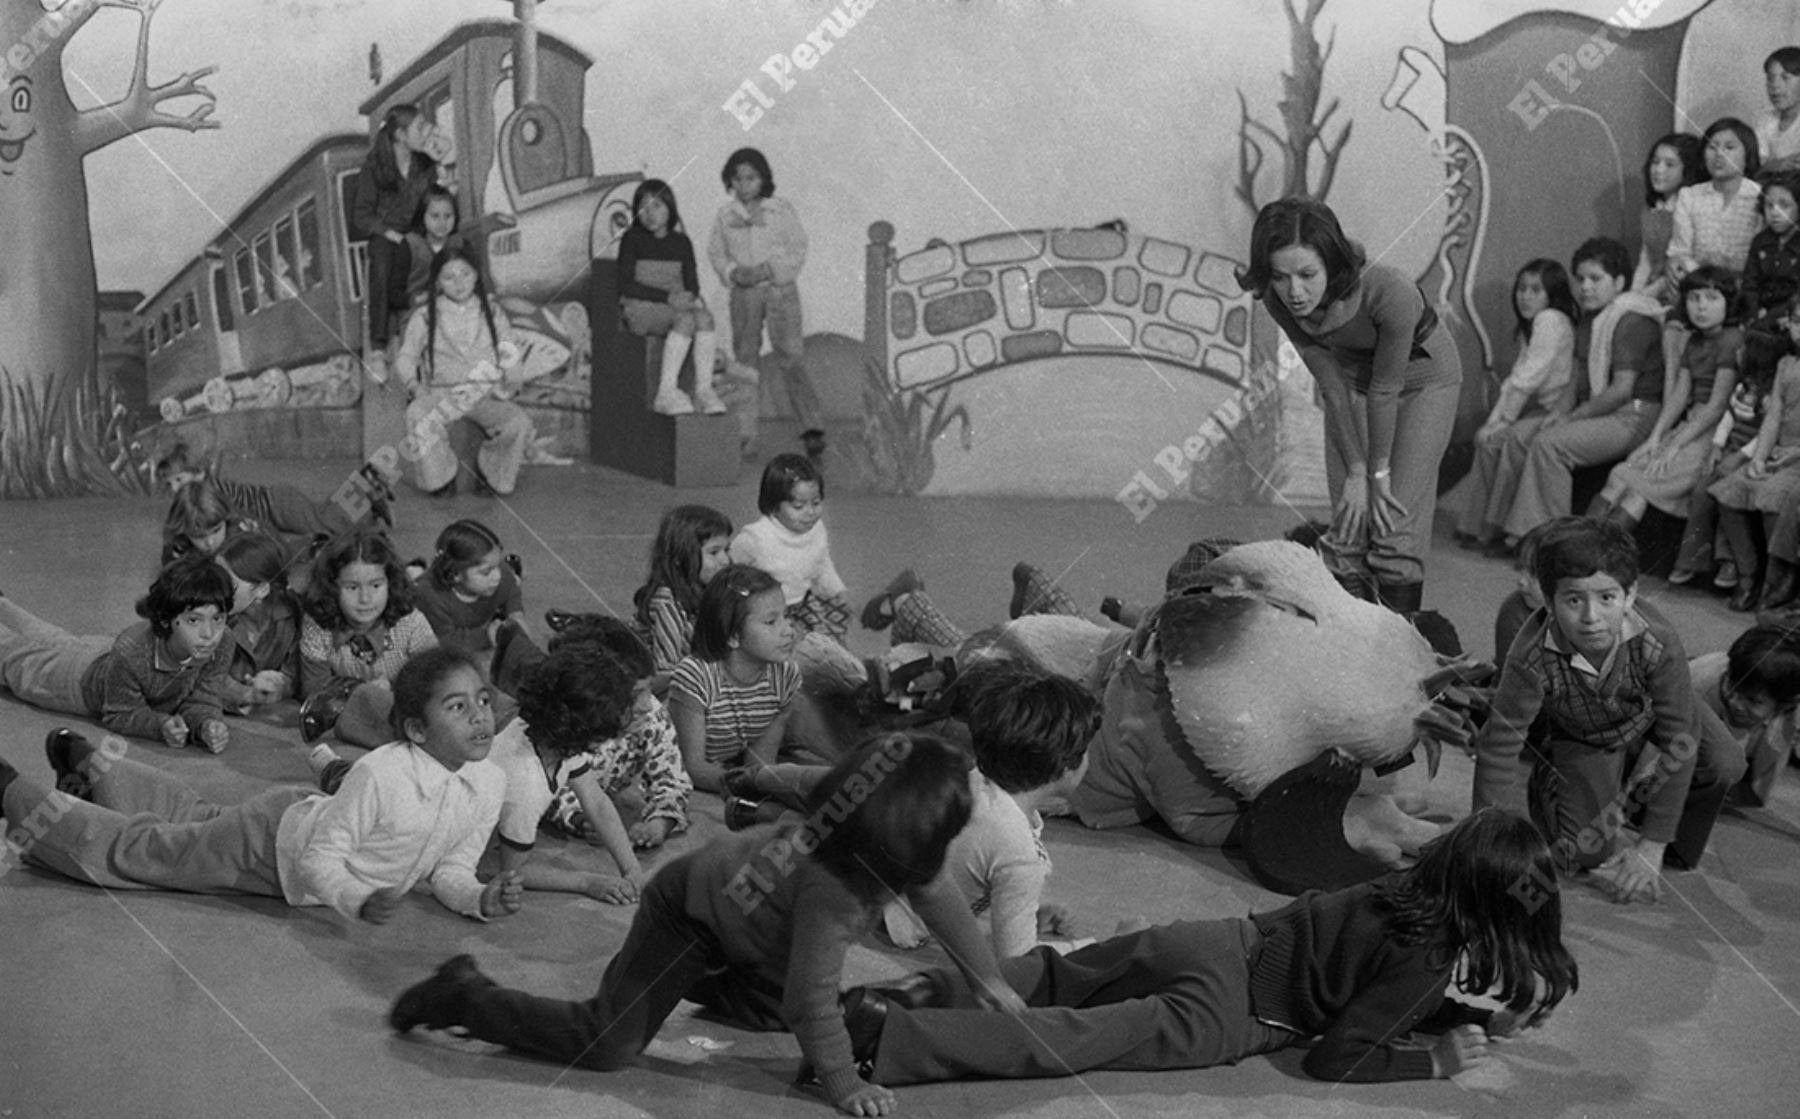 Lima - 9 agosto 1977 / Programa infantil "Hola Yola" conducido por Yola Polastri.